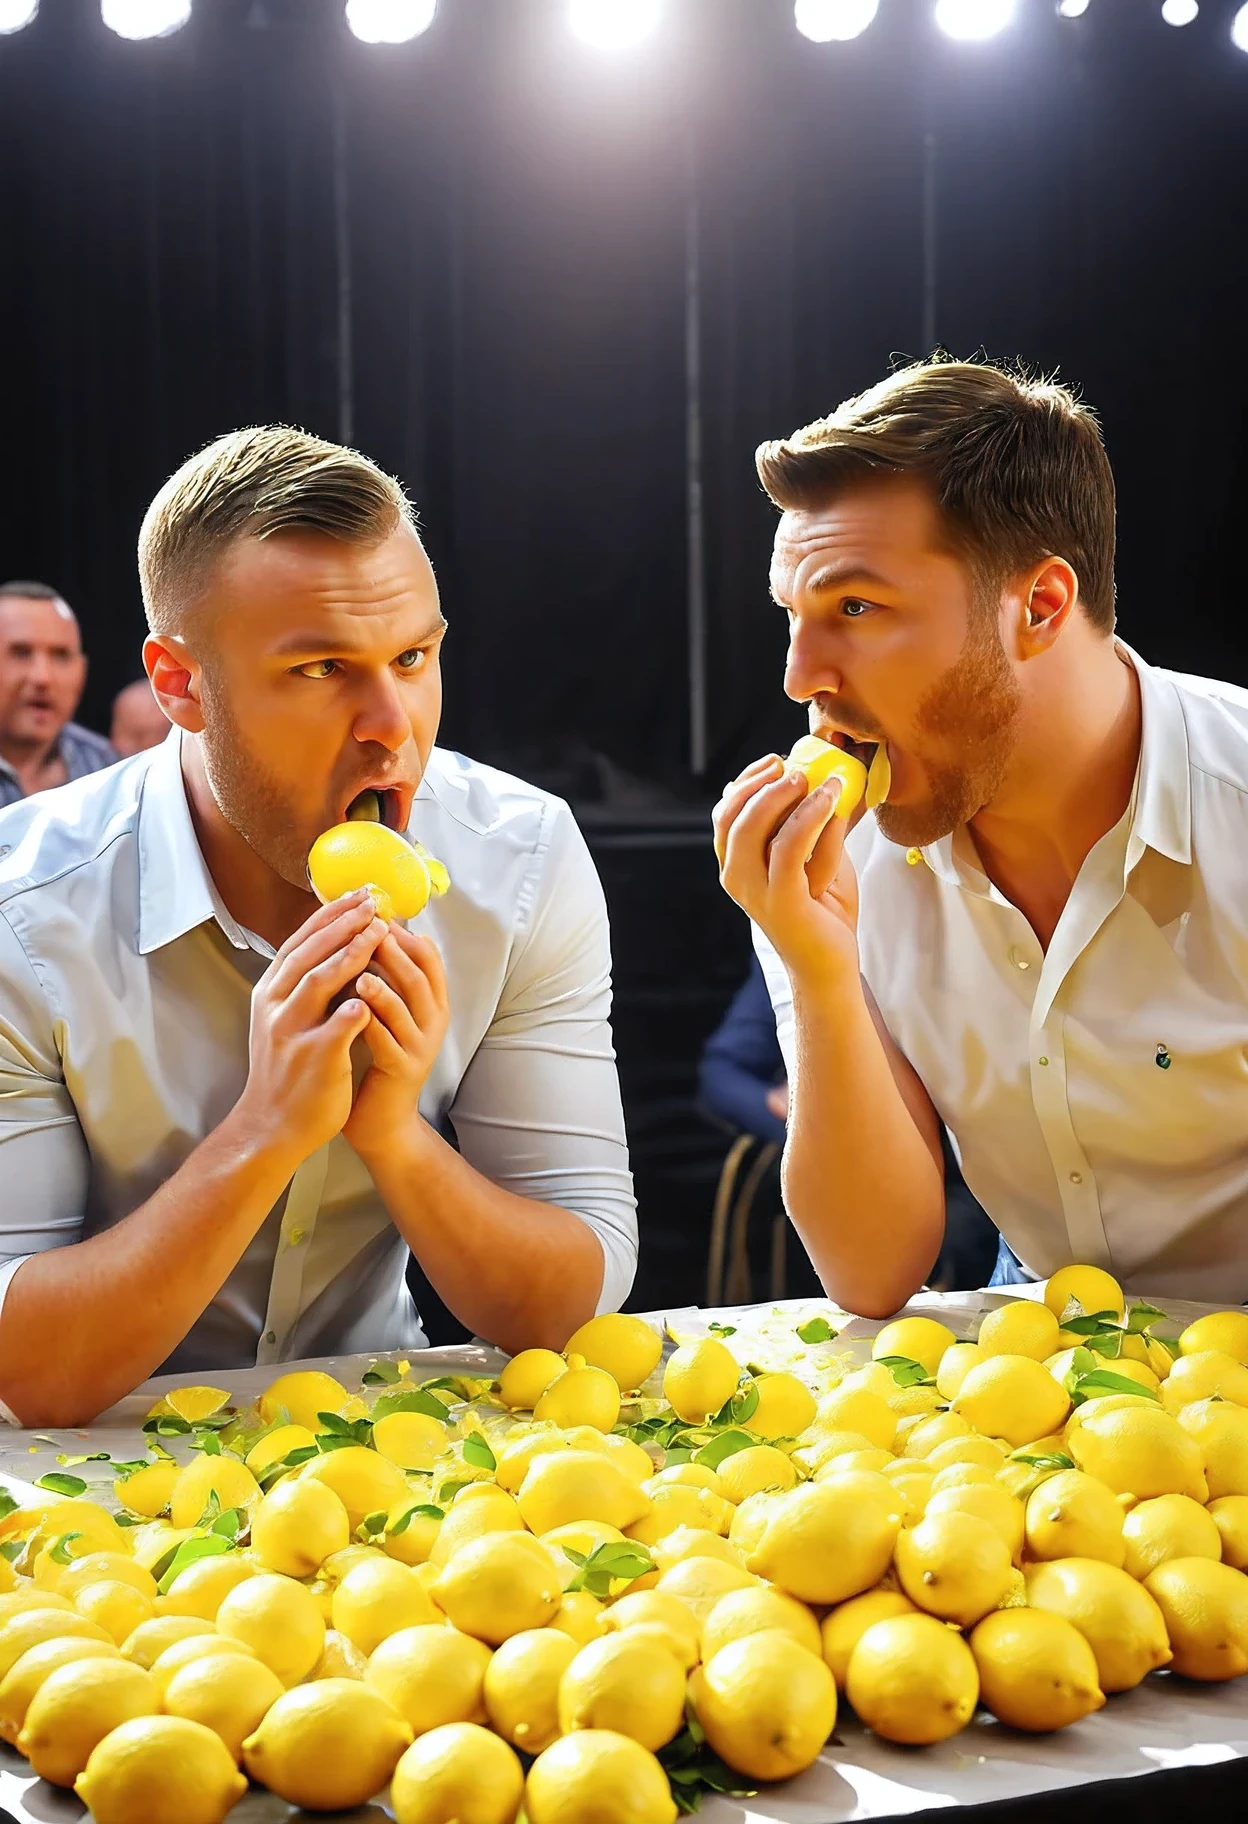 lemon eating championship, competition between 2 guys,Audience,judges,speed eating lemons,8k rendering,Photorealism,